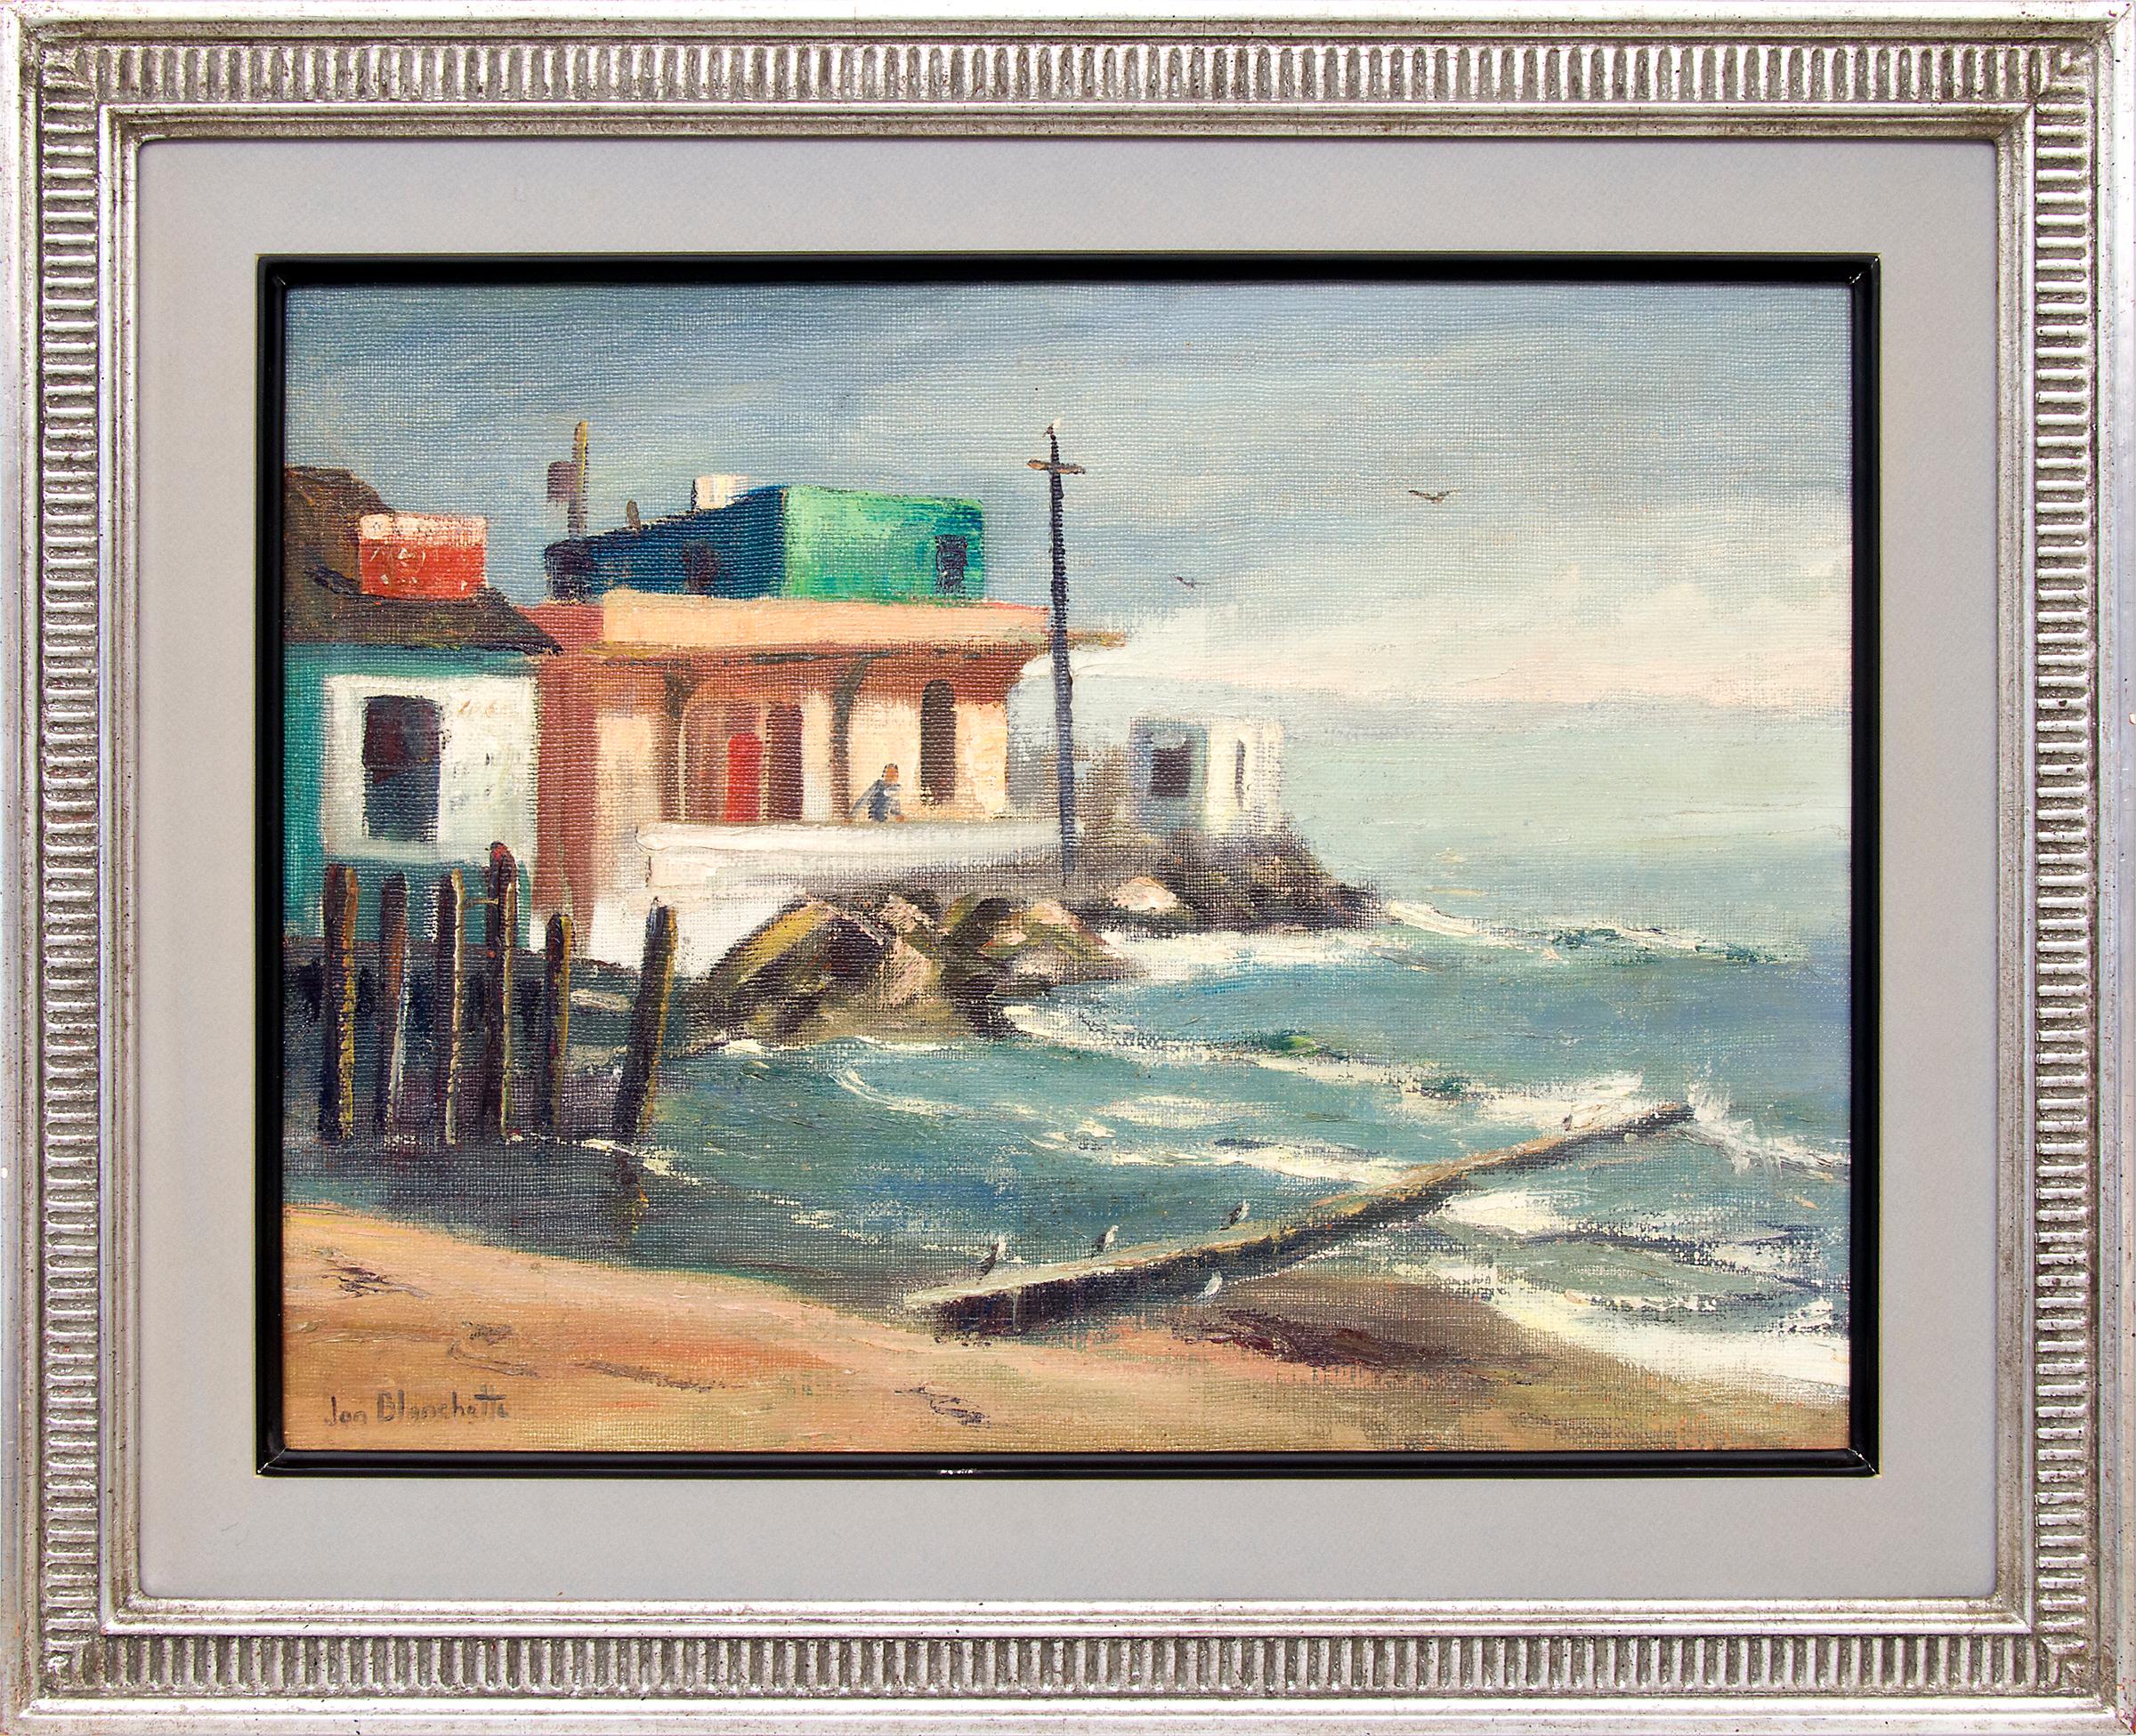 Jon Blanchette Figurative Painting - Capitola, California, 1950s Framed California Seascape Marine Oil Painting